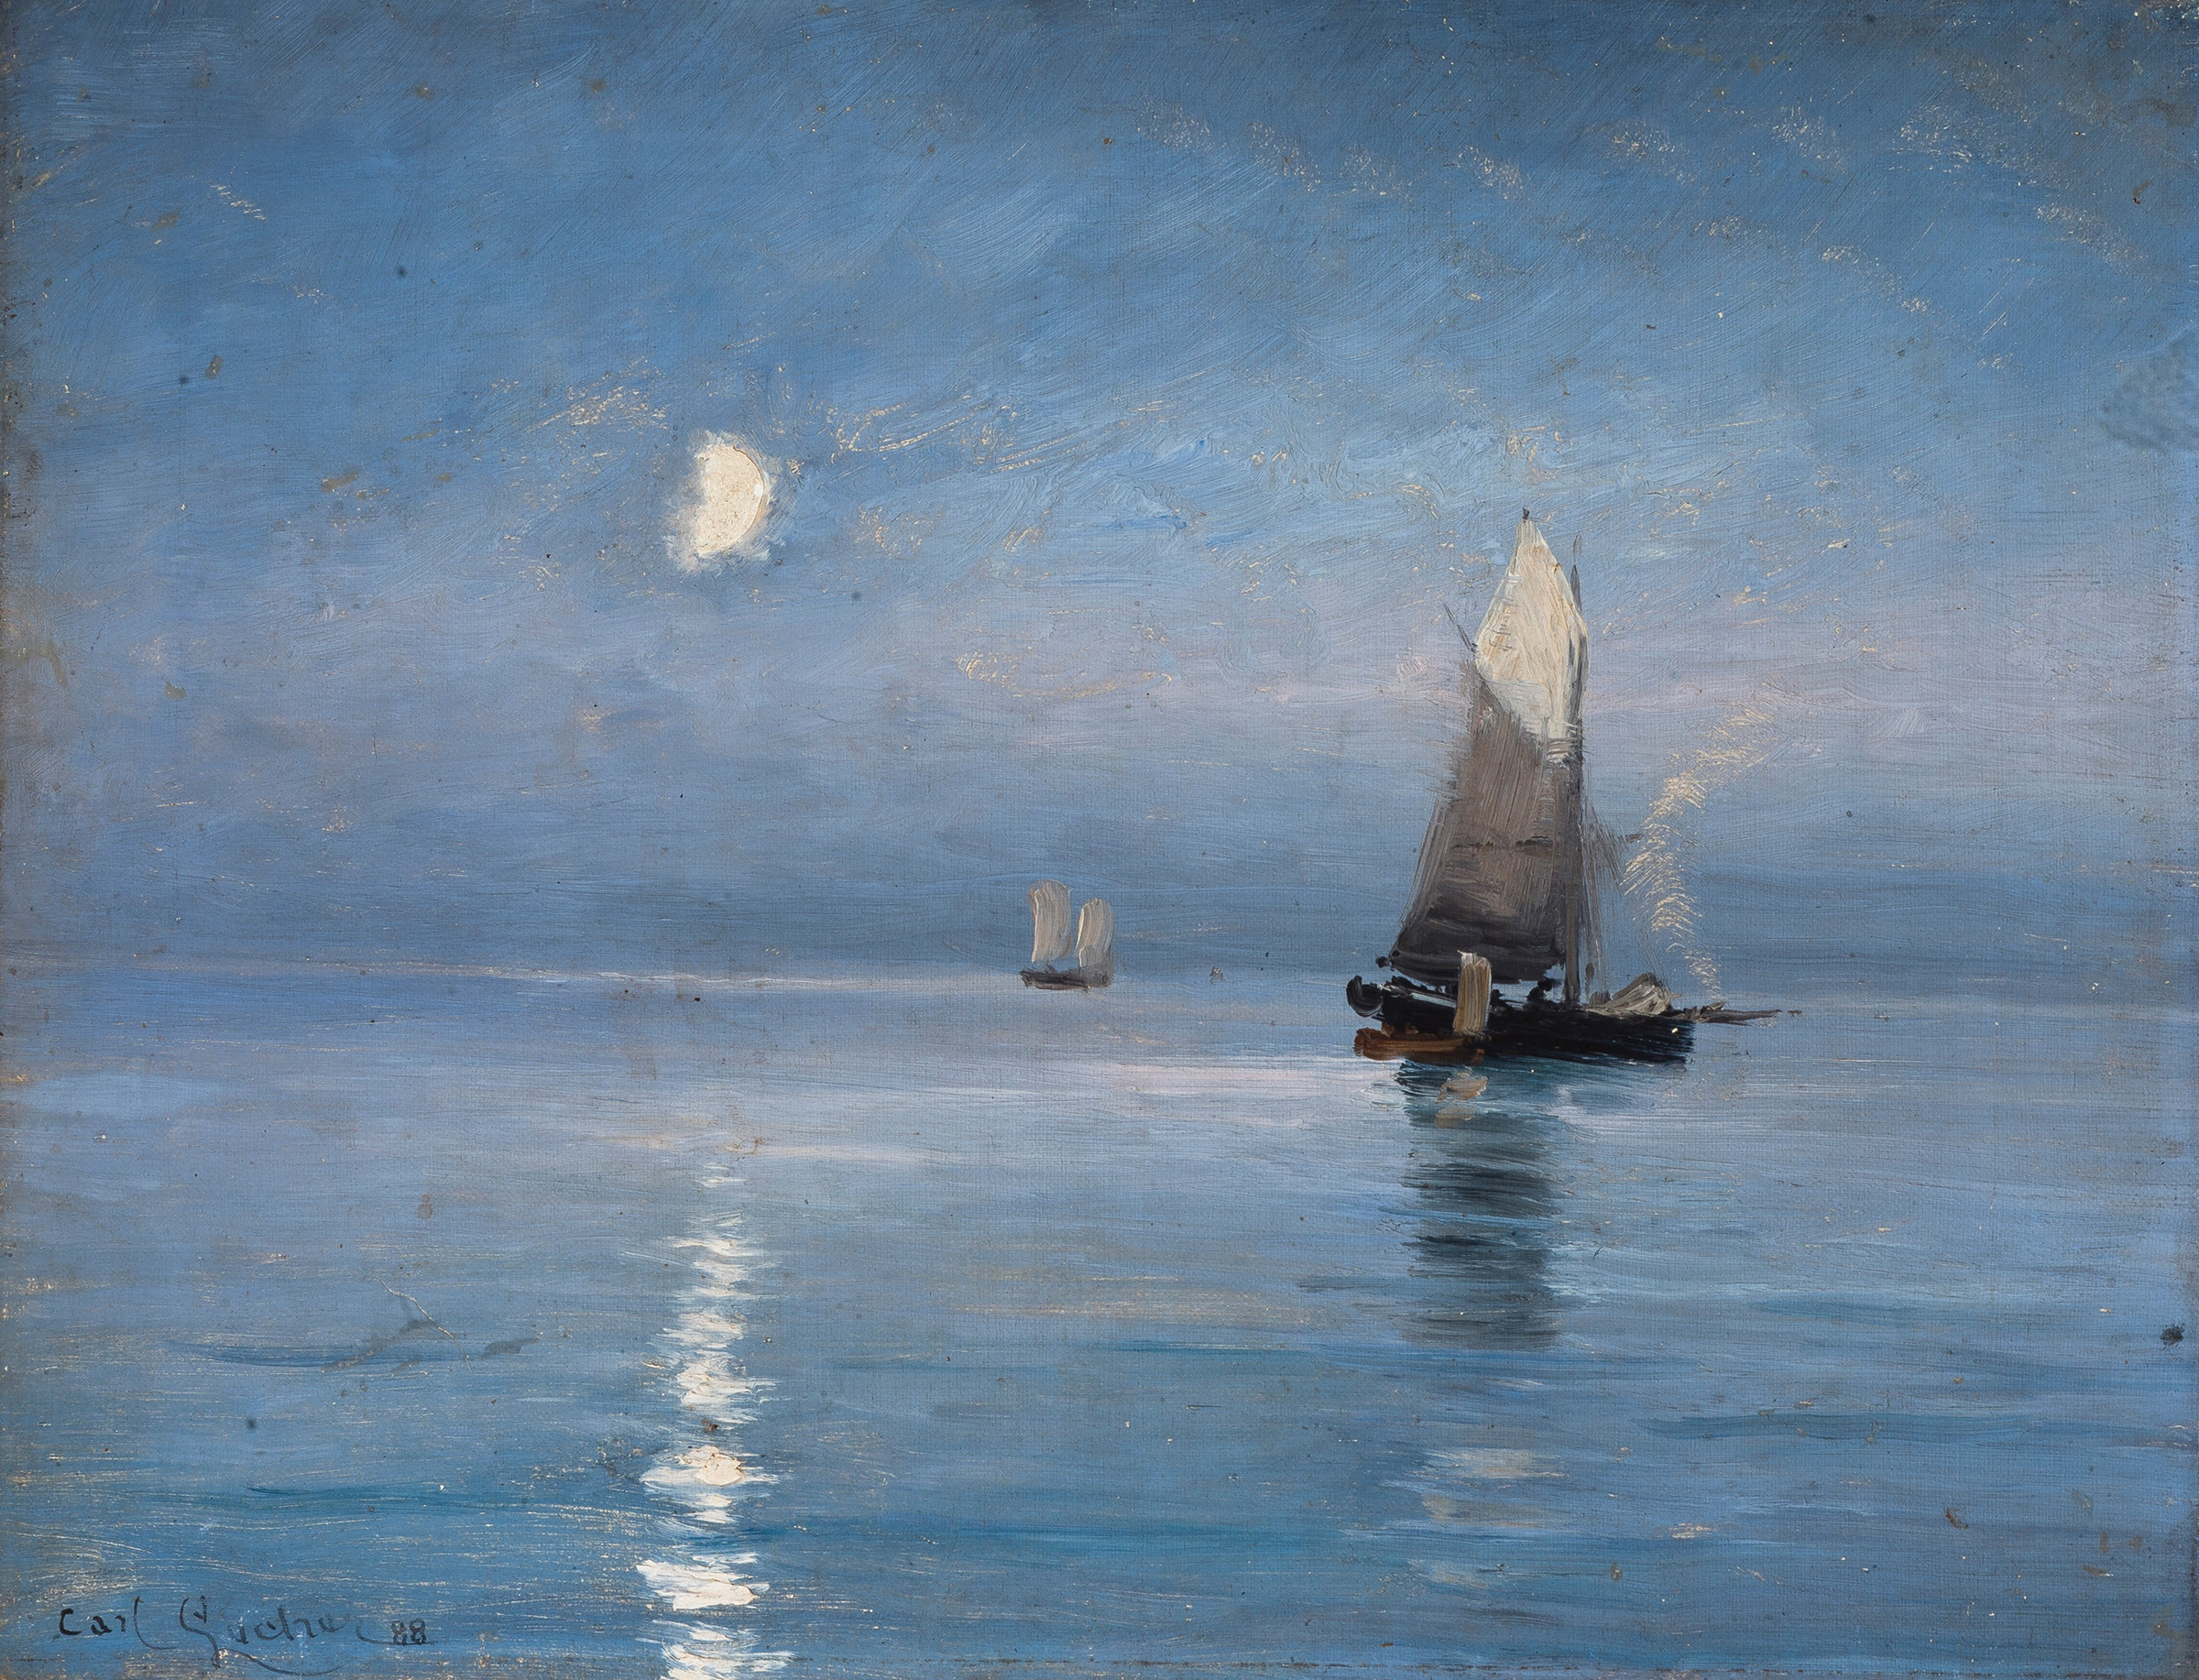 Рыбацкие лодки в лунную ночь by Carl Locher - 1888 - 45.5 x 35 cm 